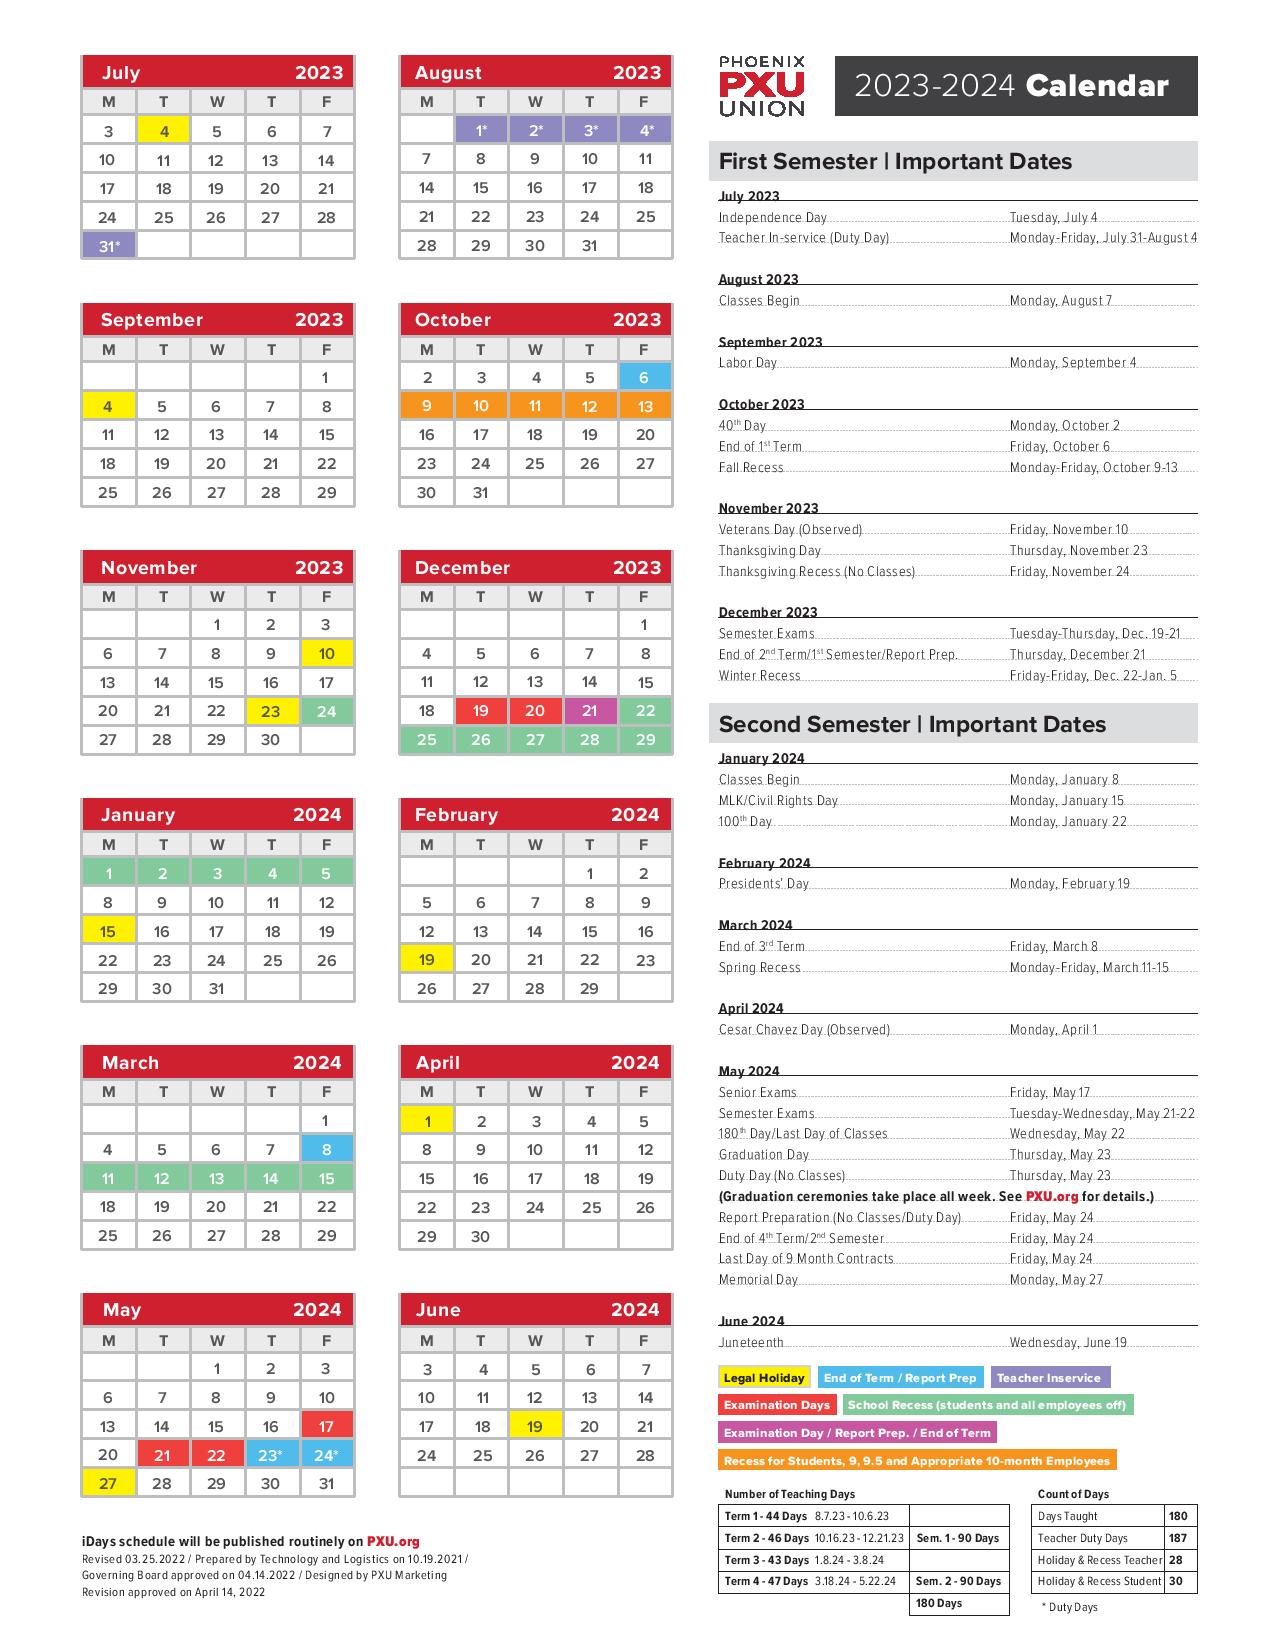 phoenix-union-high-school-district-calendar-2023-2024-in-pdf